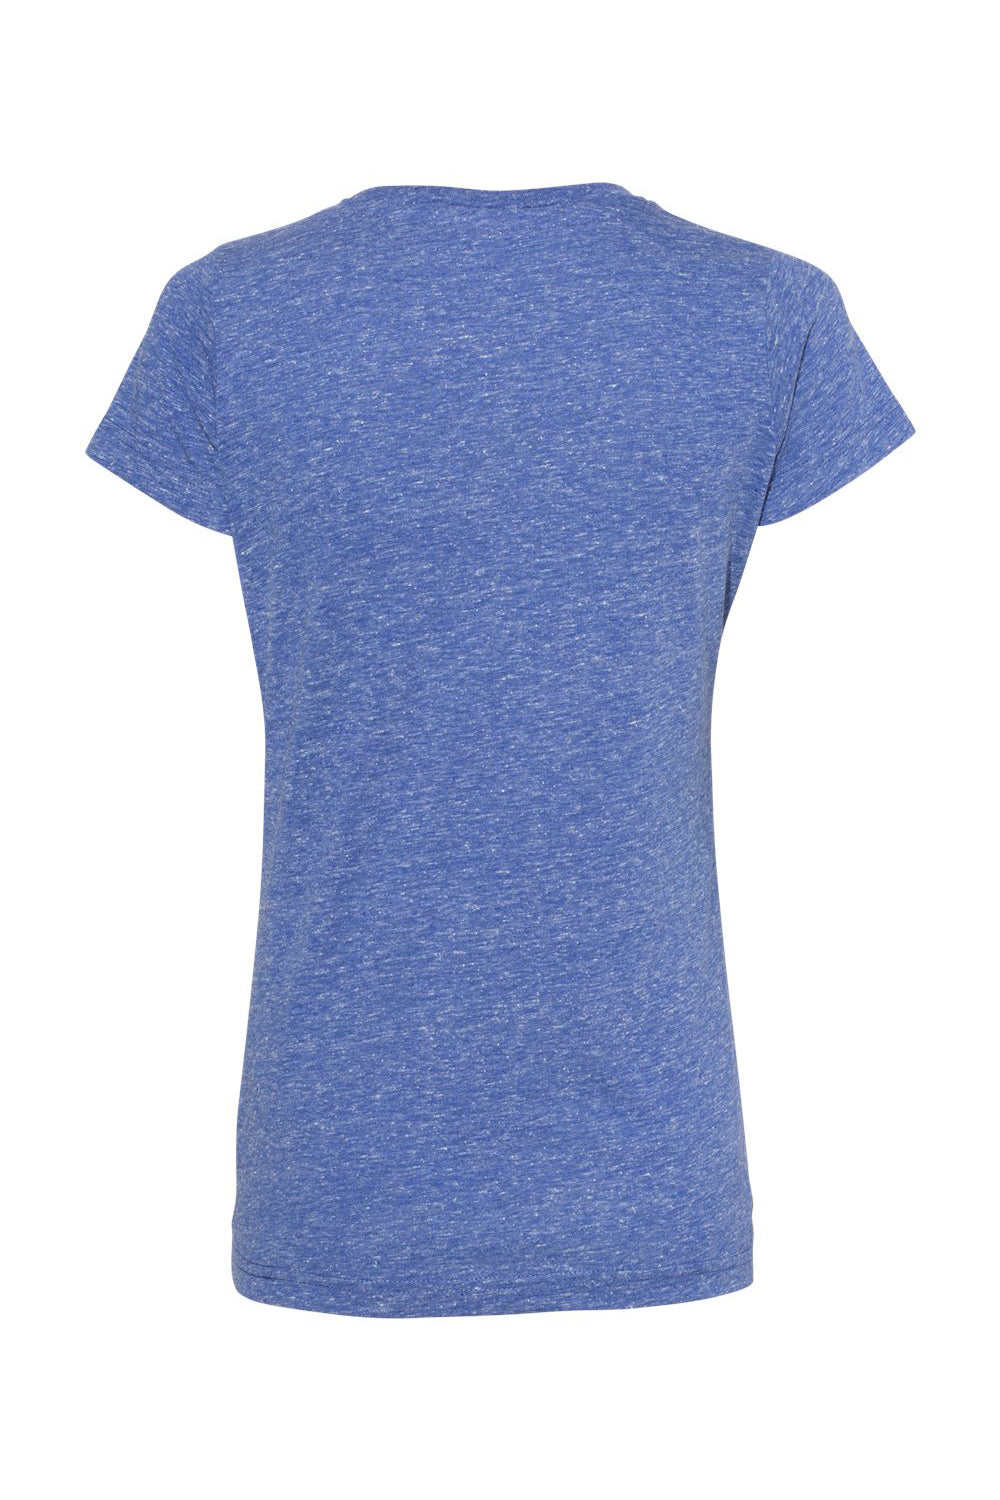 LAT 3591 Womens Harborside Melange Short Sleeve V-Neck T-Shirt Royal Blue Flat Back